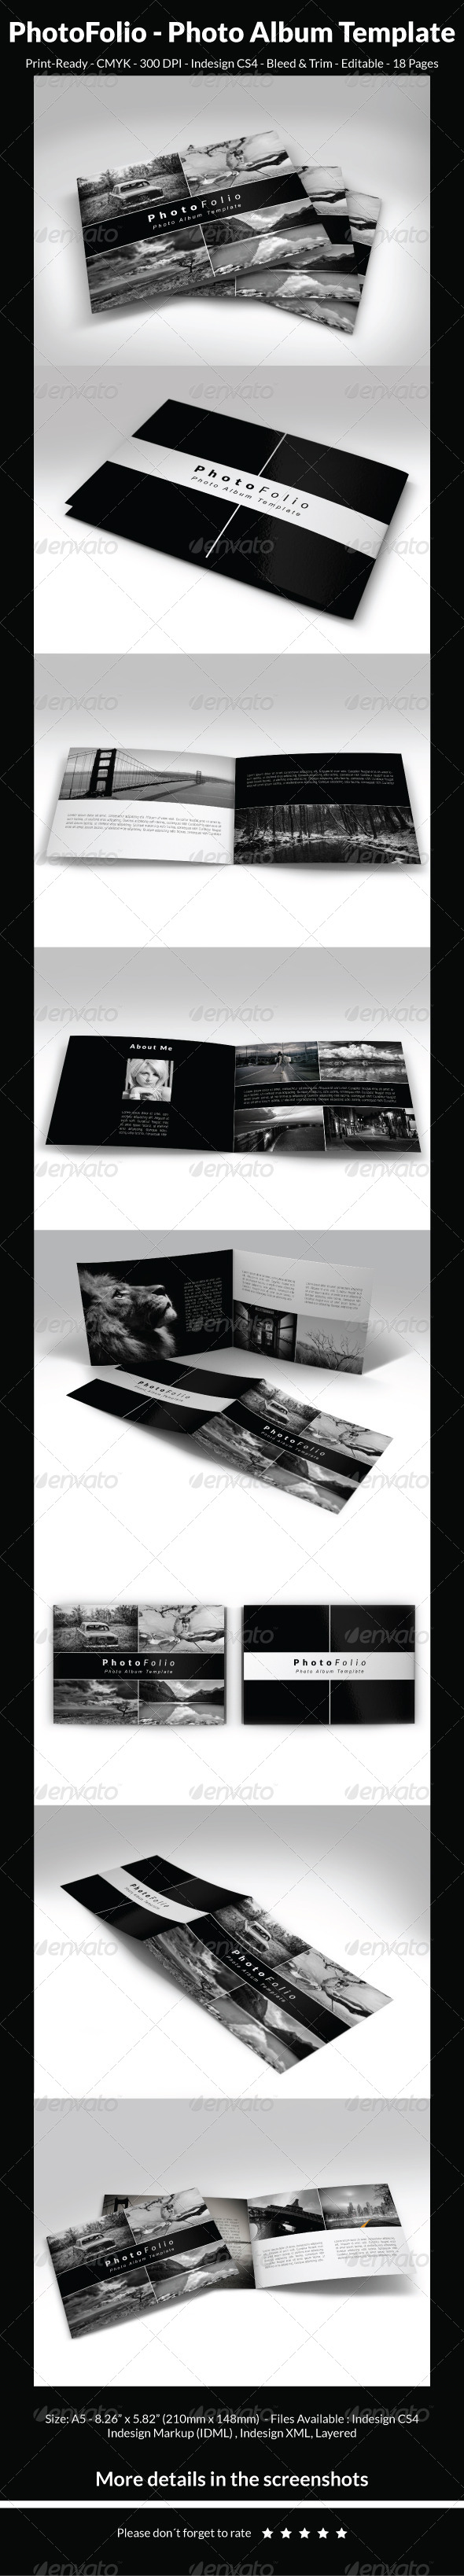 PhotoFolio - Photo Album Template - Photo Albums Print Templates